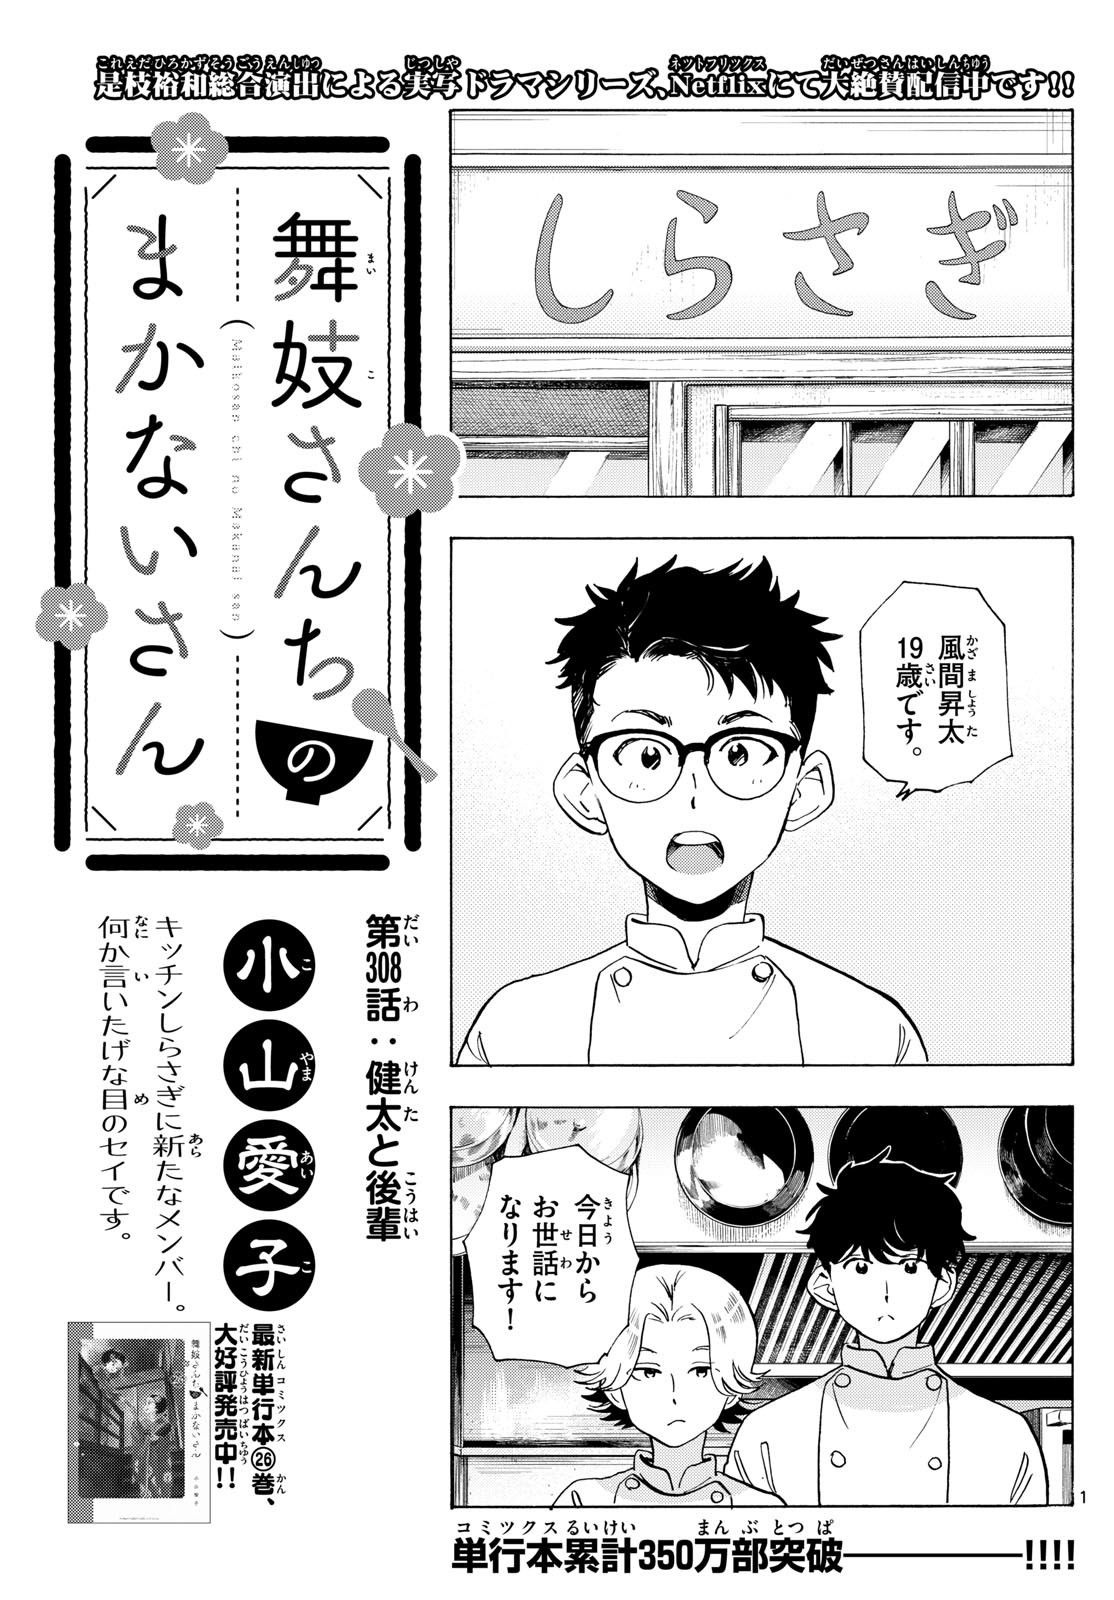 Maiko-san Chi no Makanai-san - Chapter 308 - Page 1